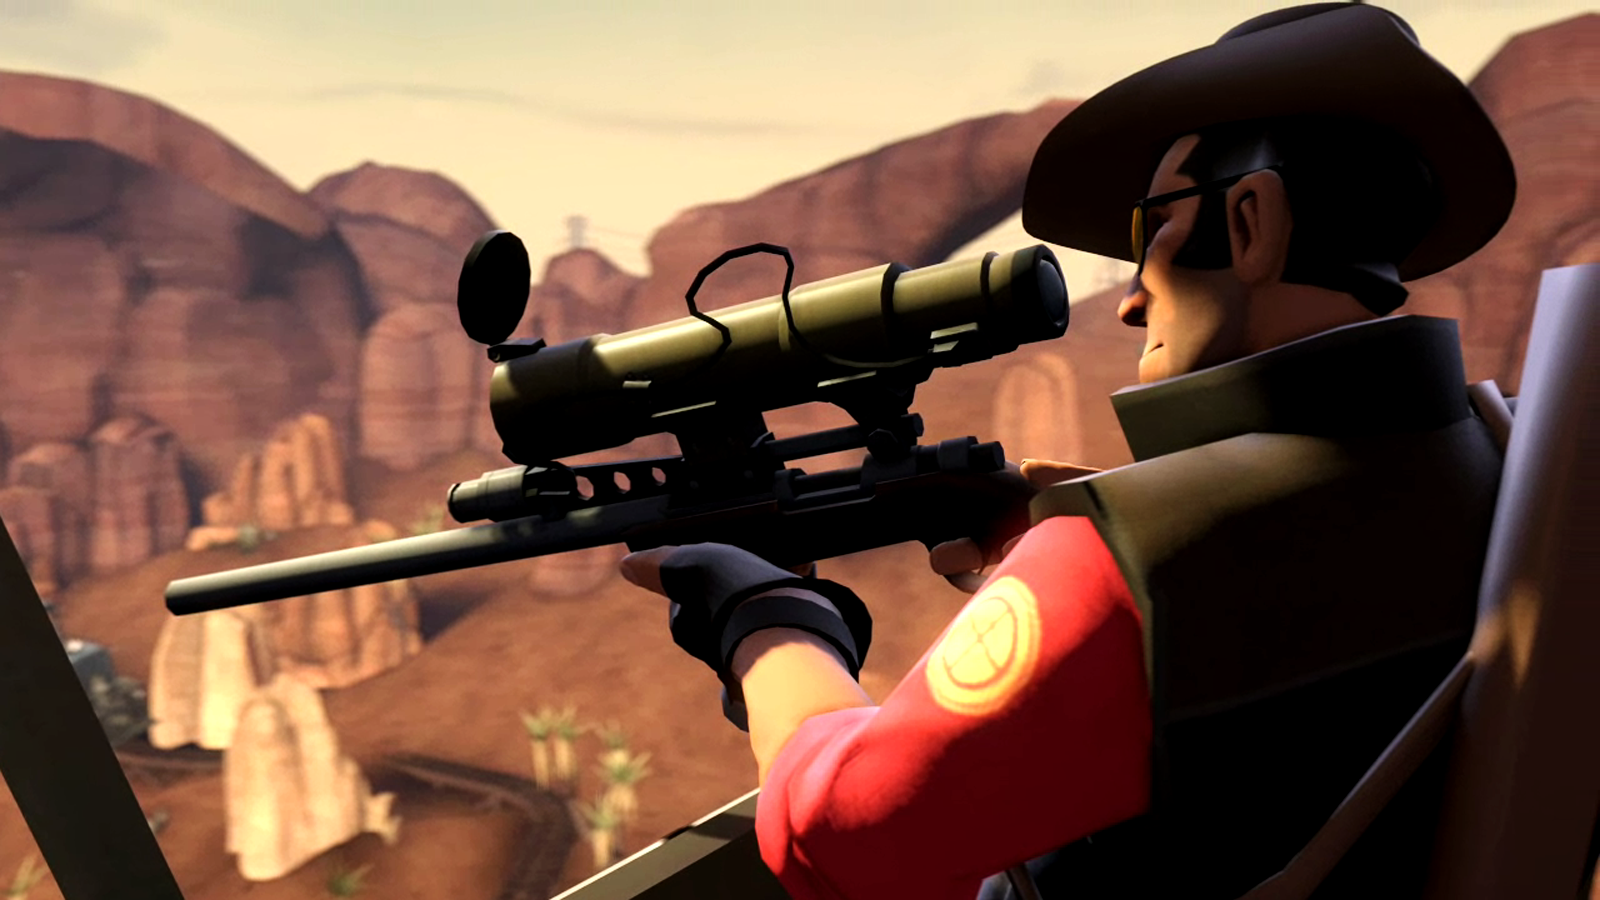 Best Sniper Wallpaper From Video Games Screensavers